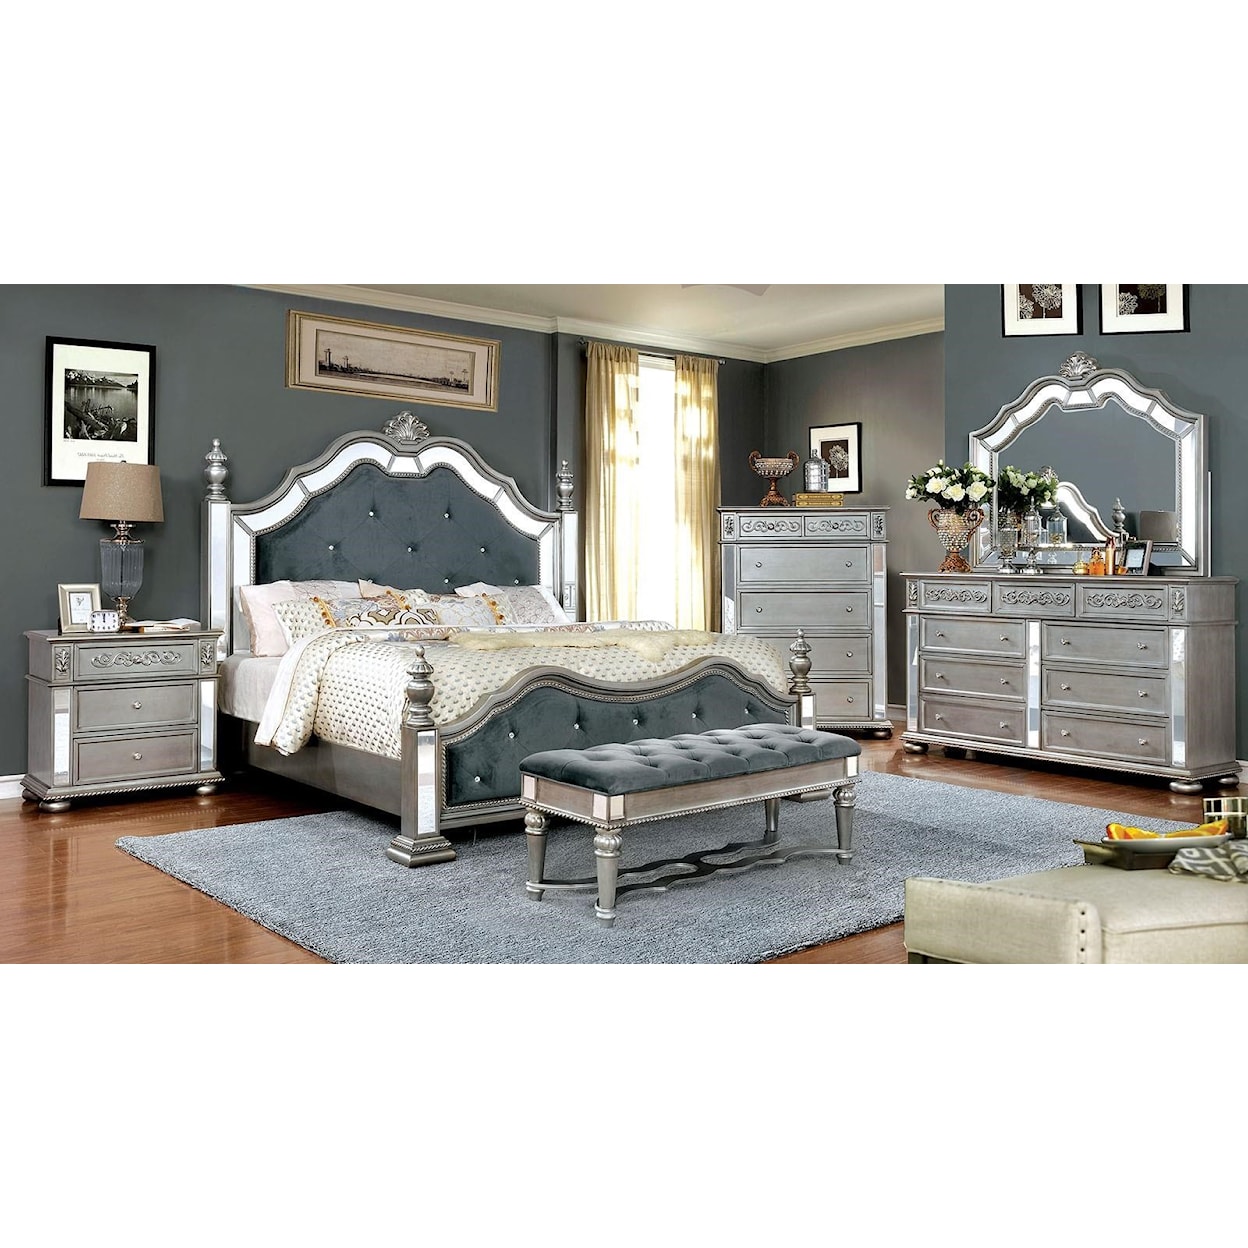 Furniture of America Azha Upholested Bed